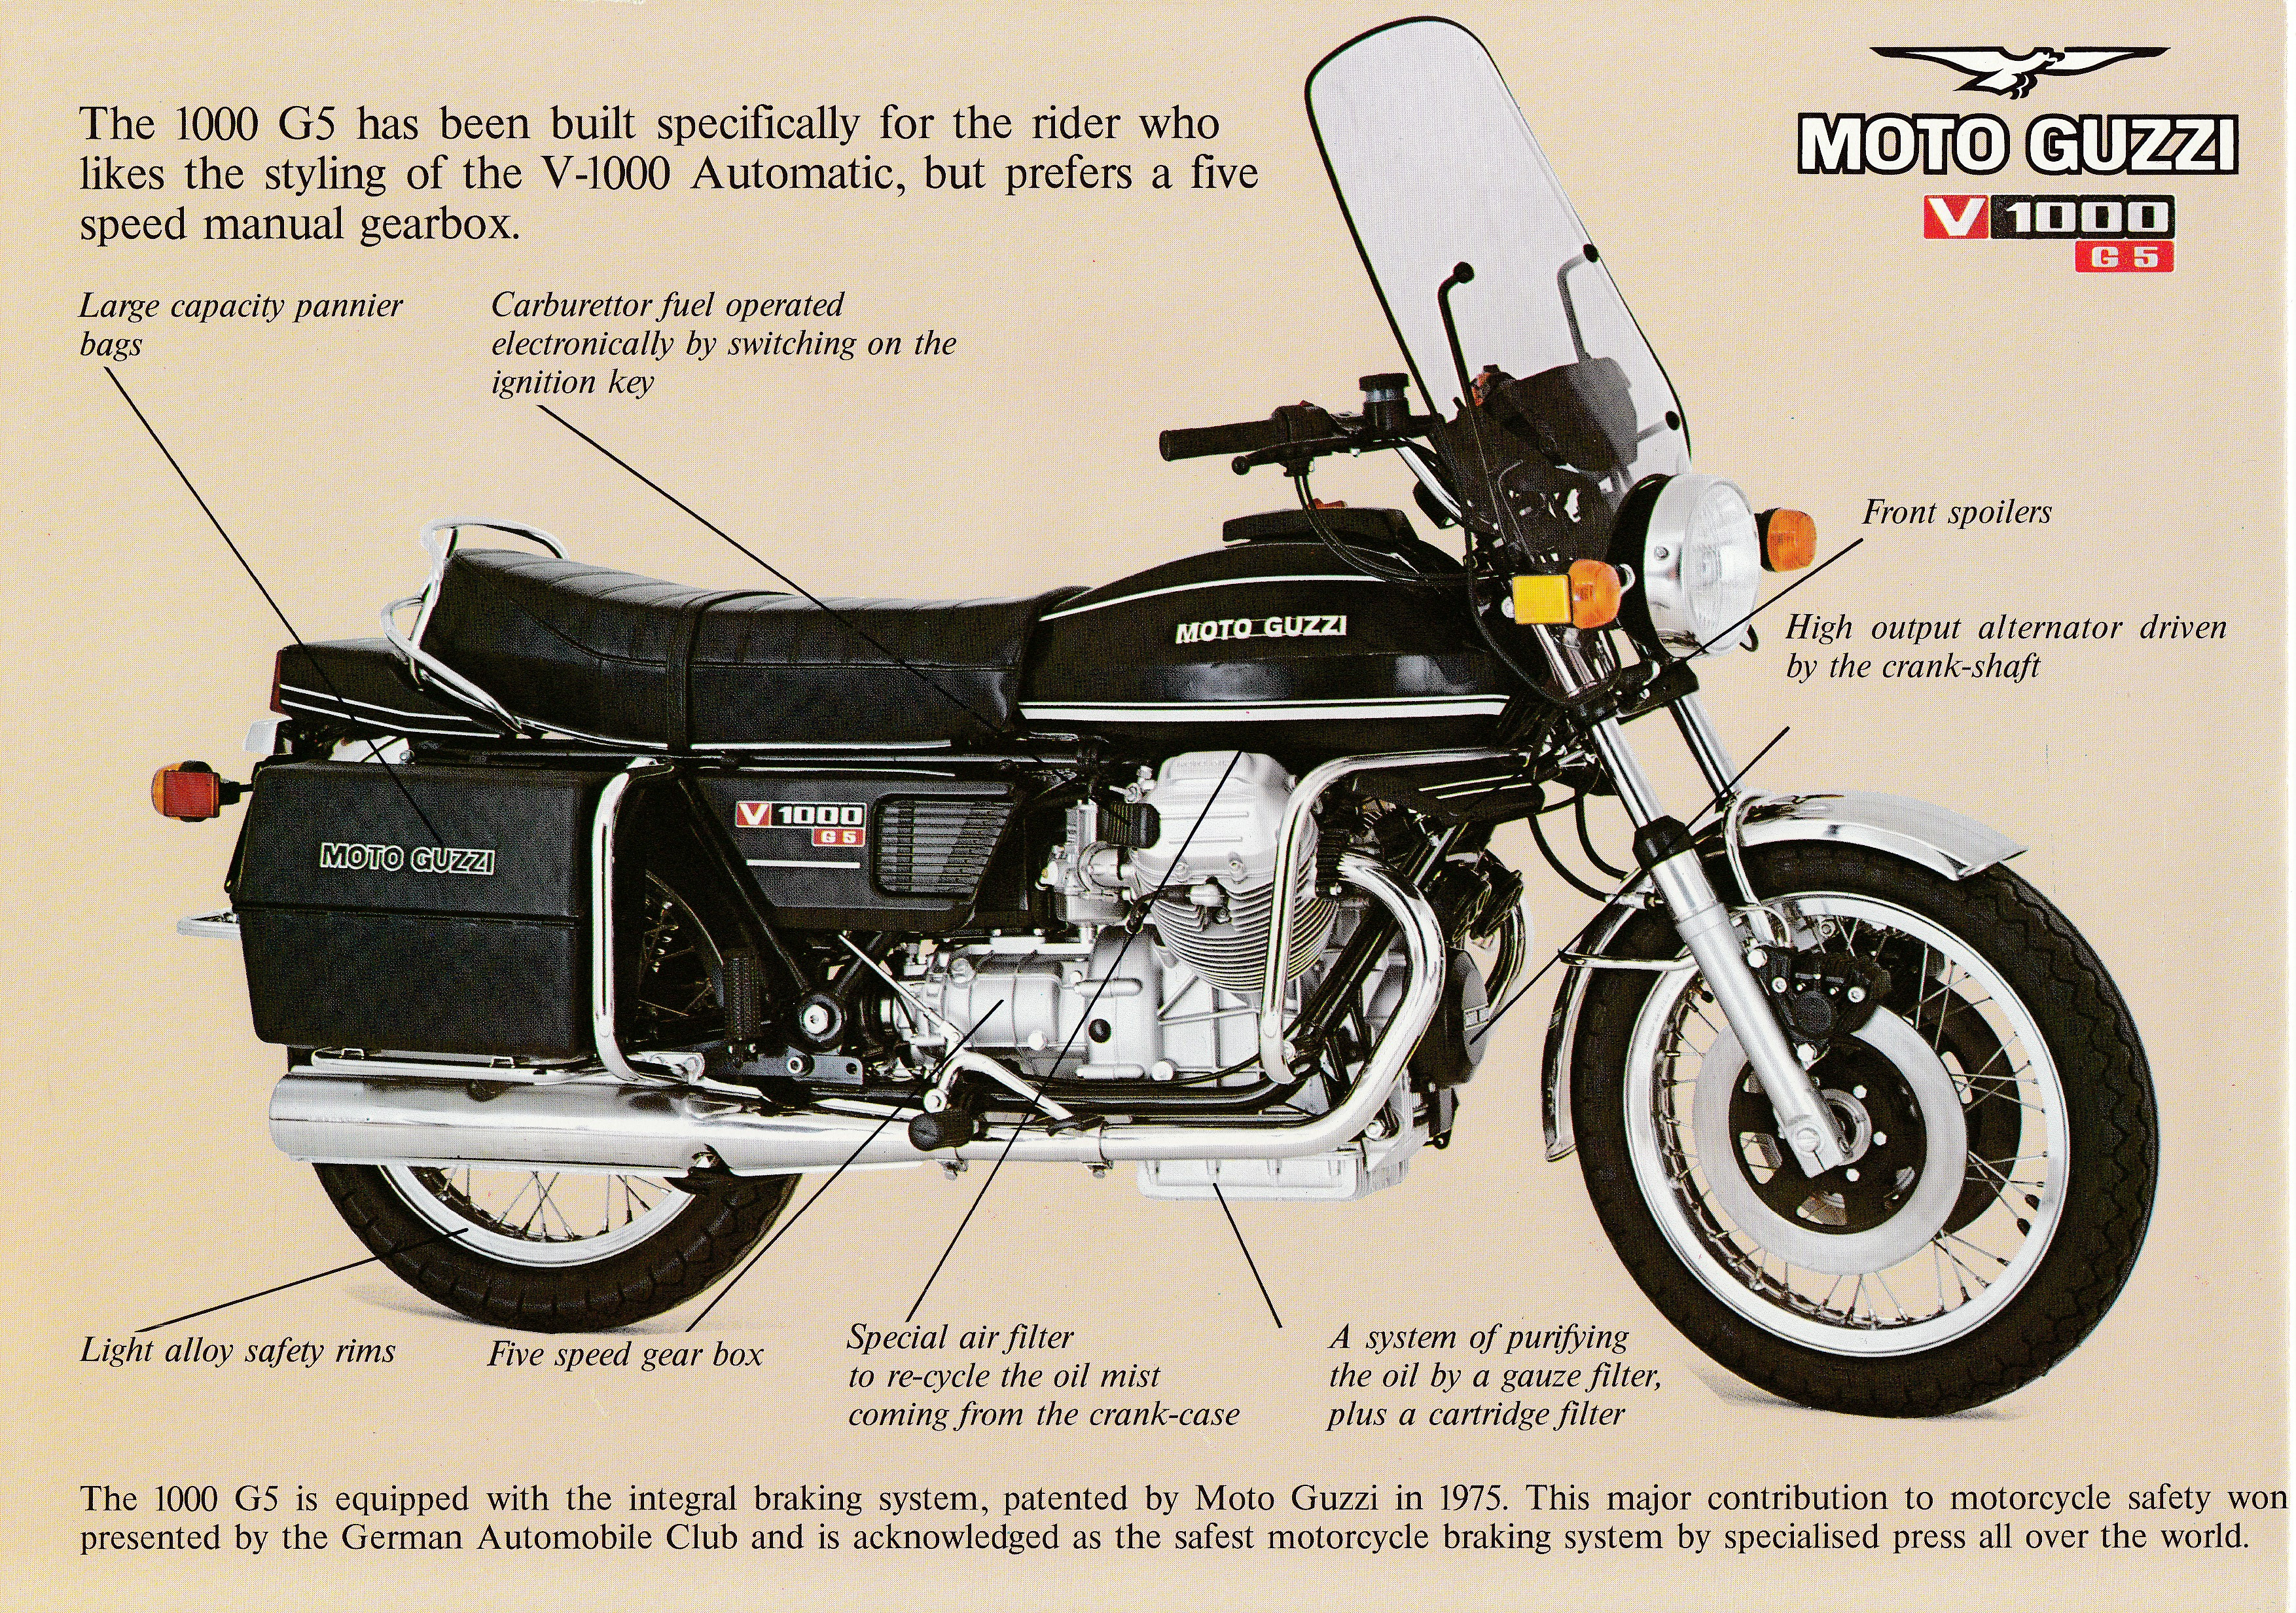 Brochure - Moto Guzzi V1000 G5 version 5